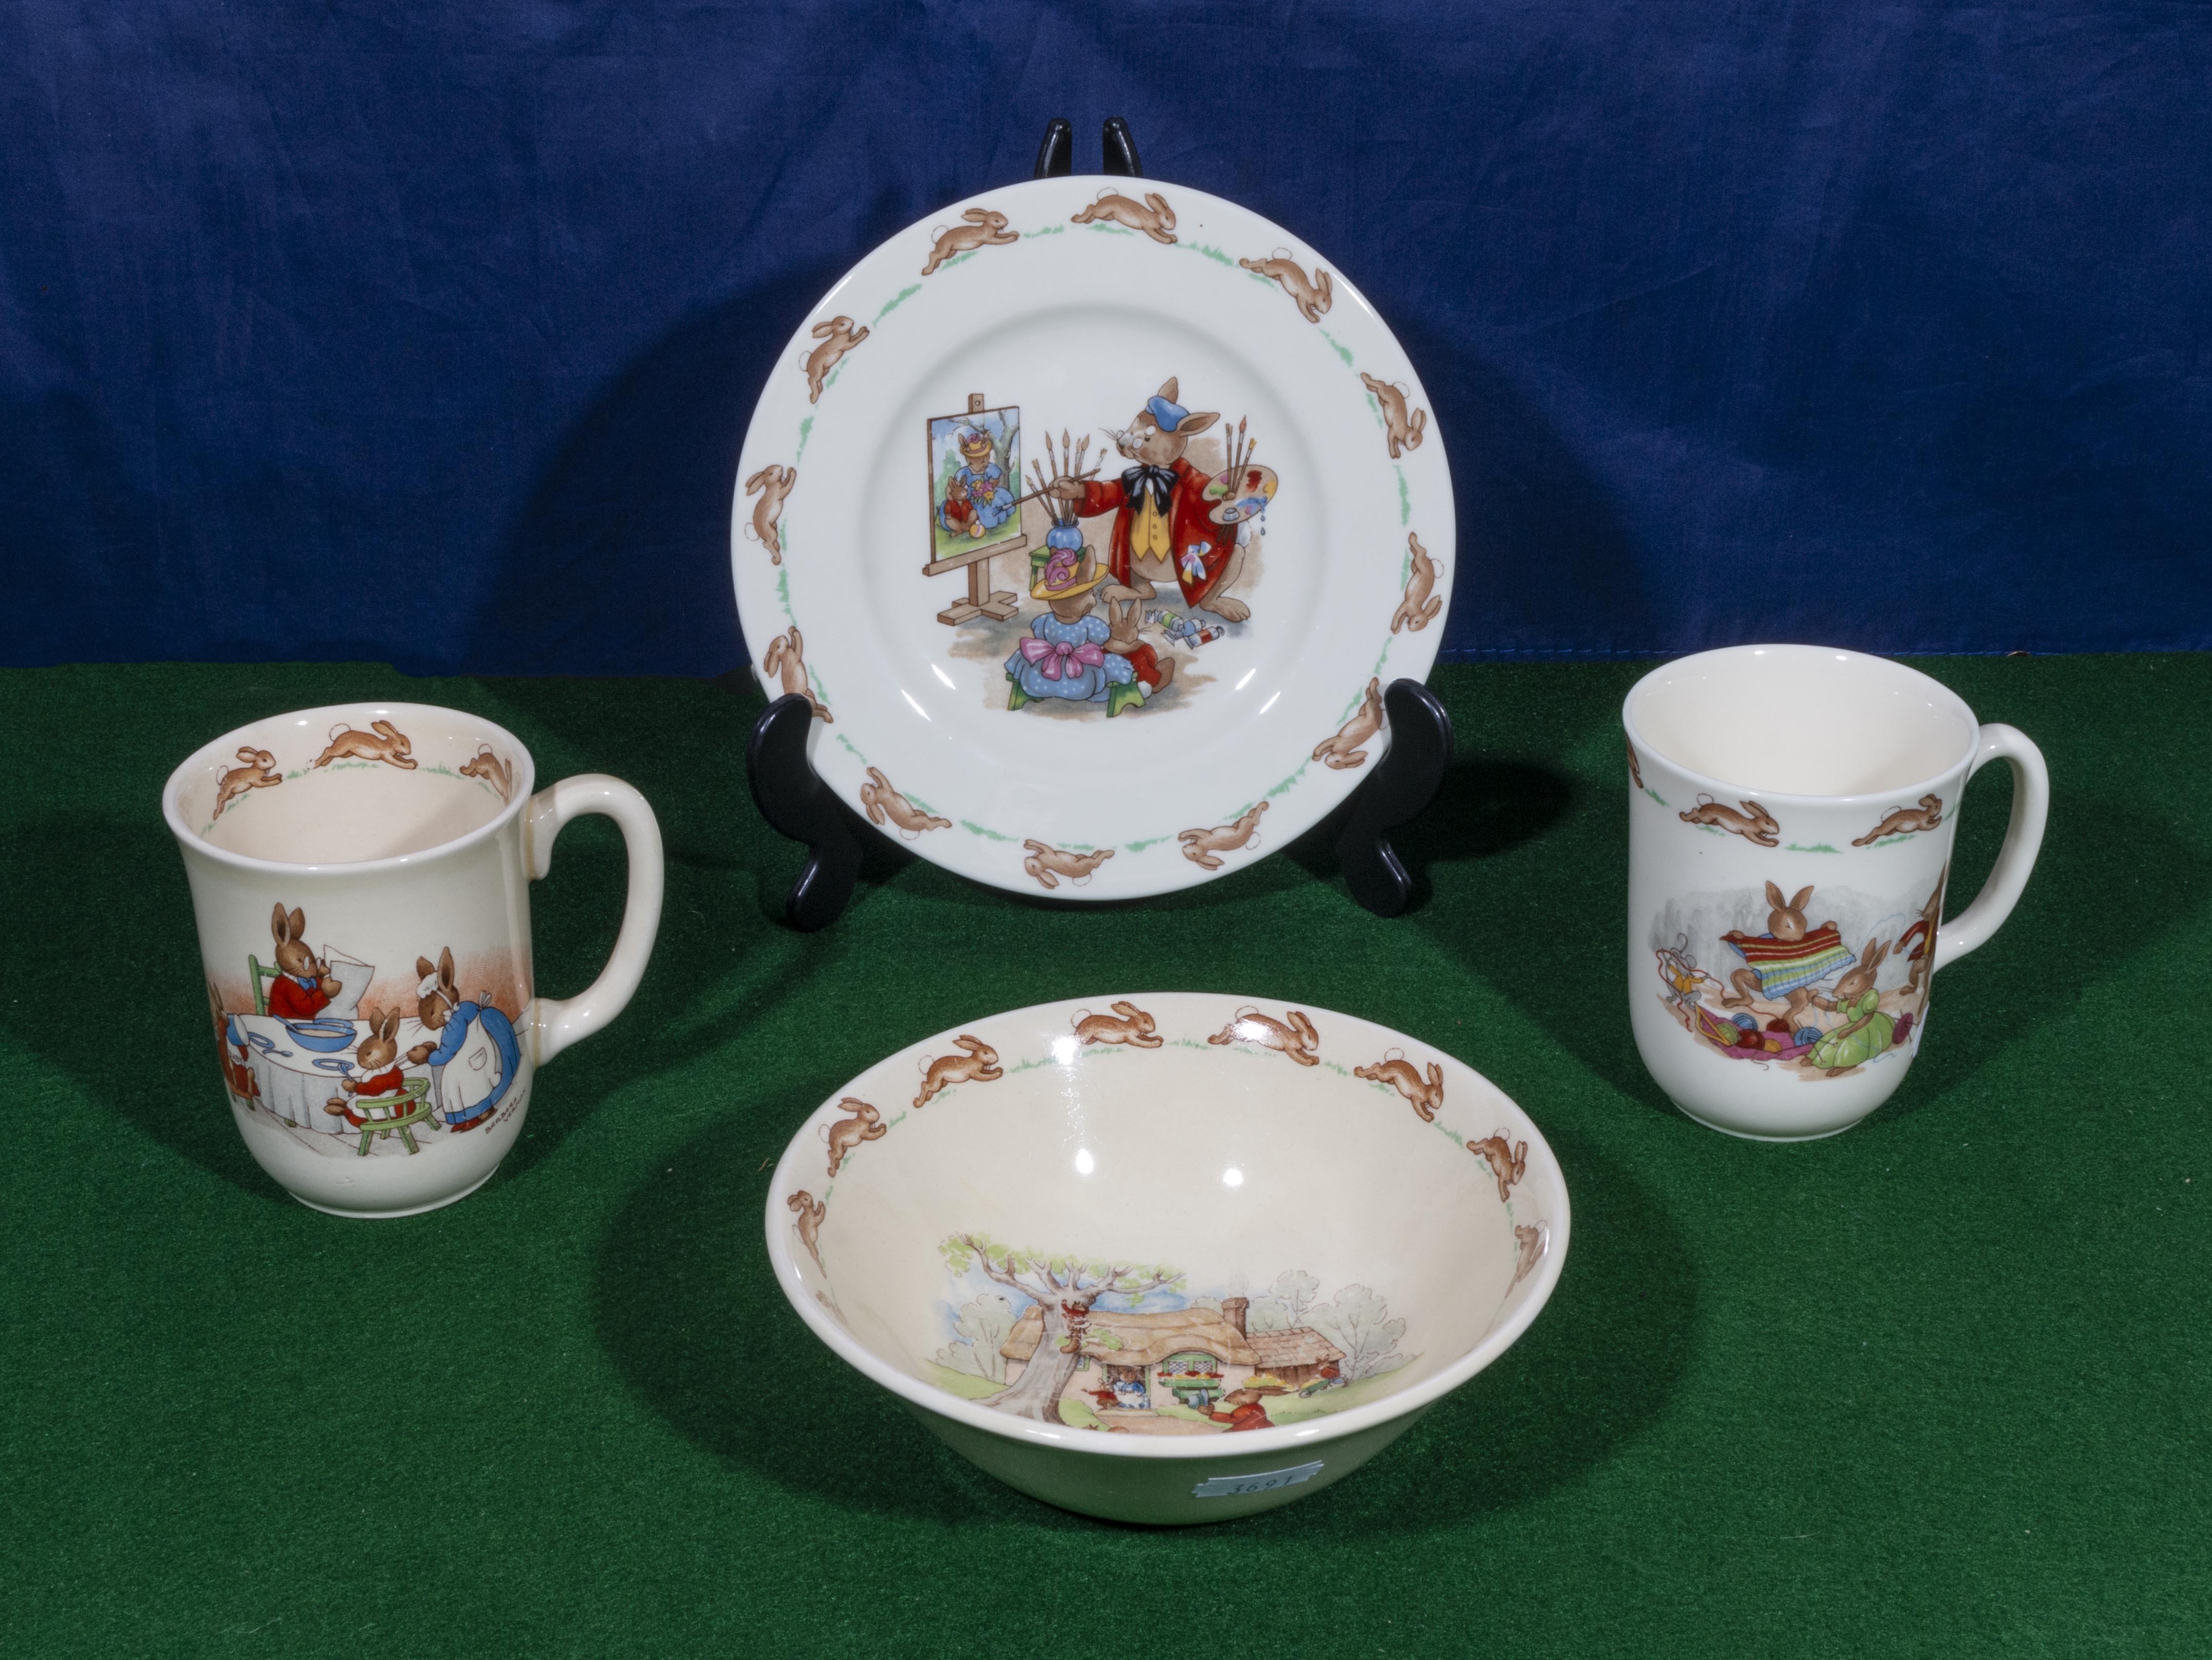 Two Bunnikins mugs, a plate and a bowl